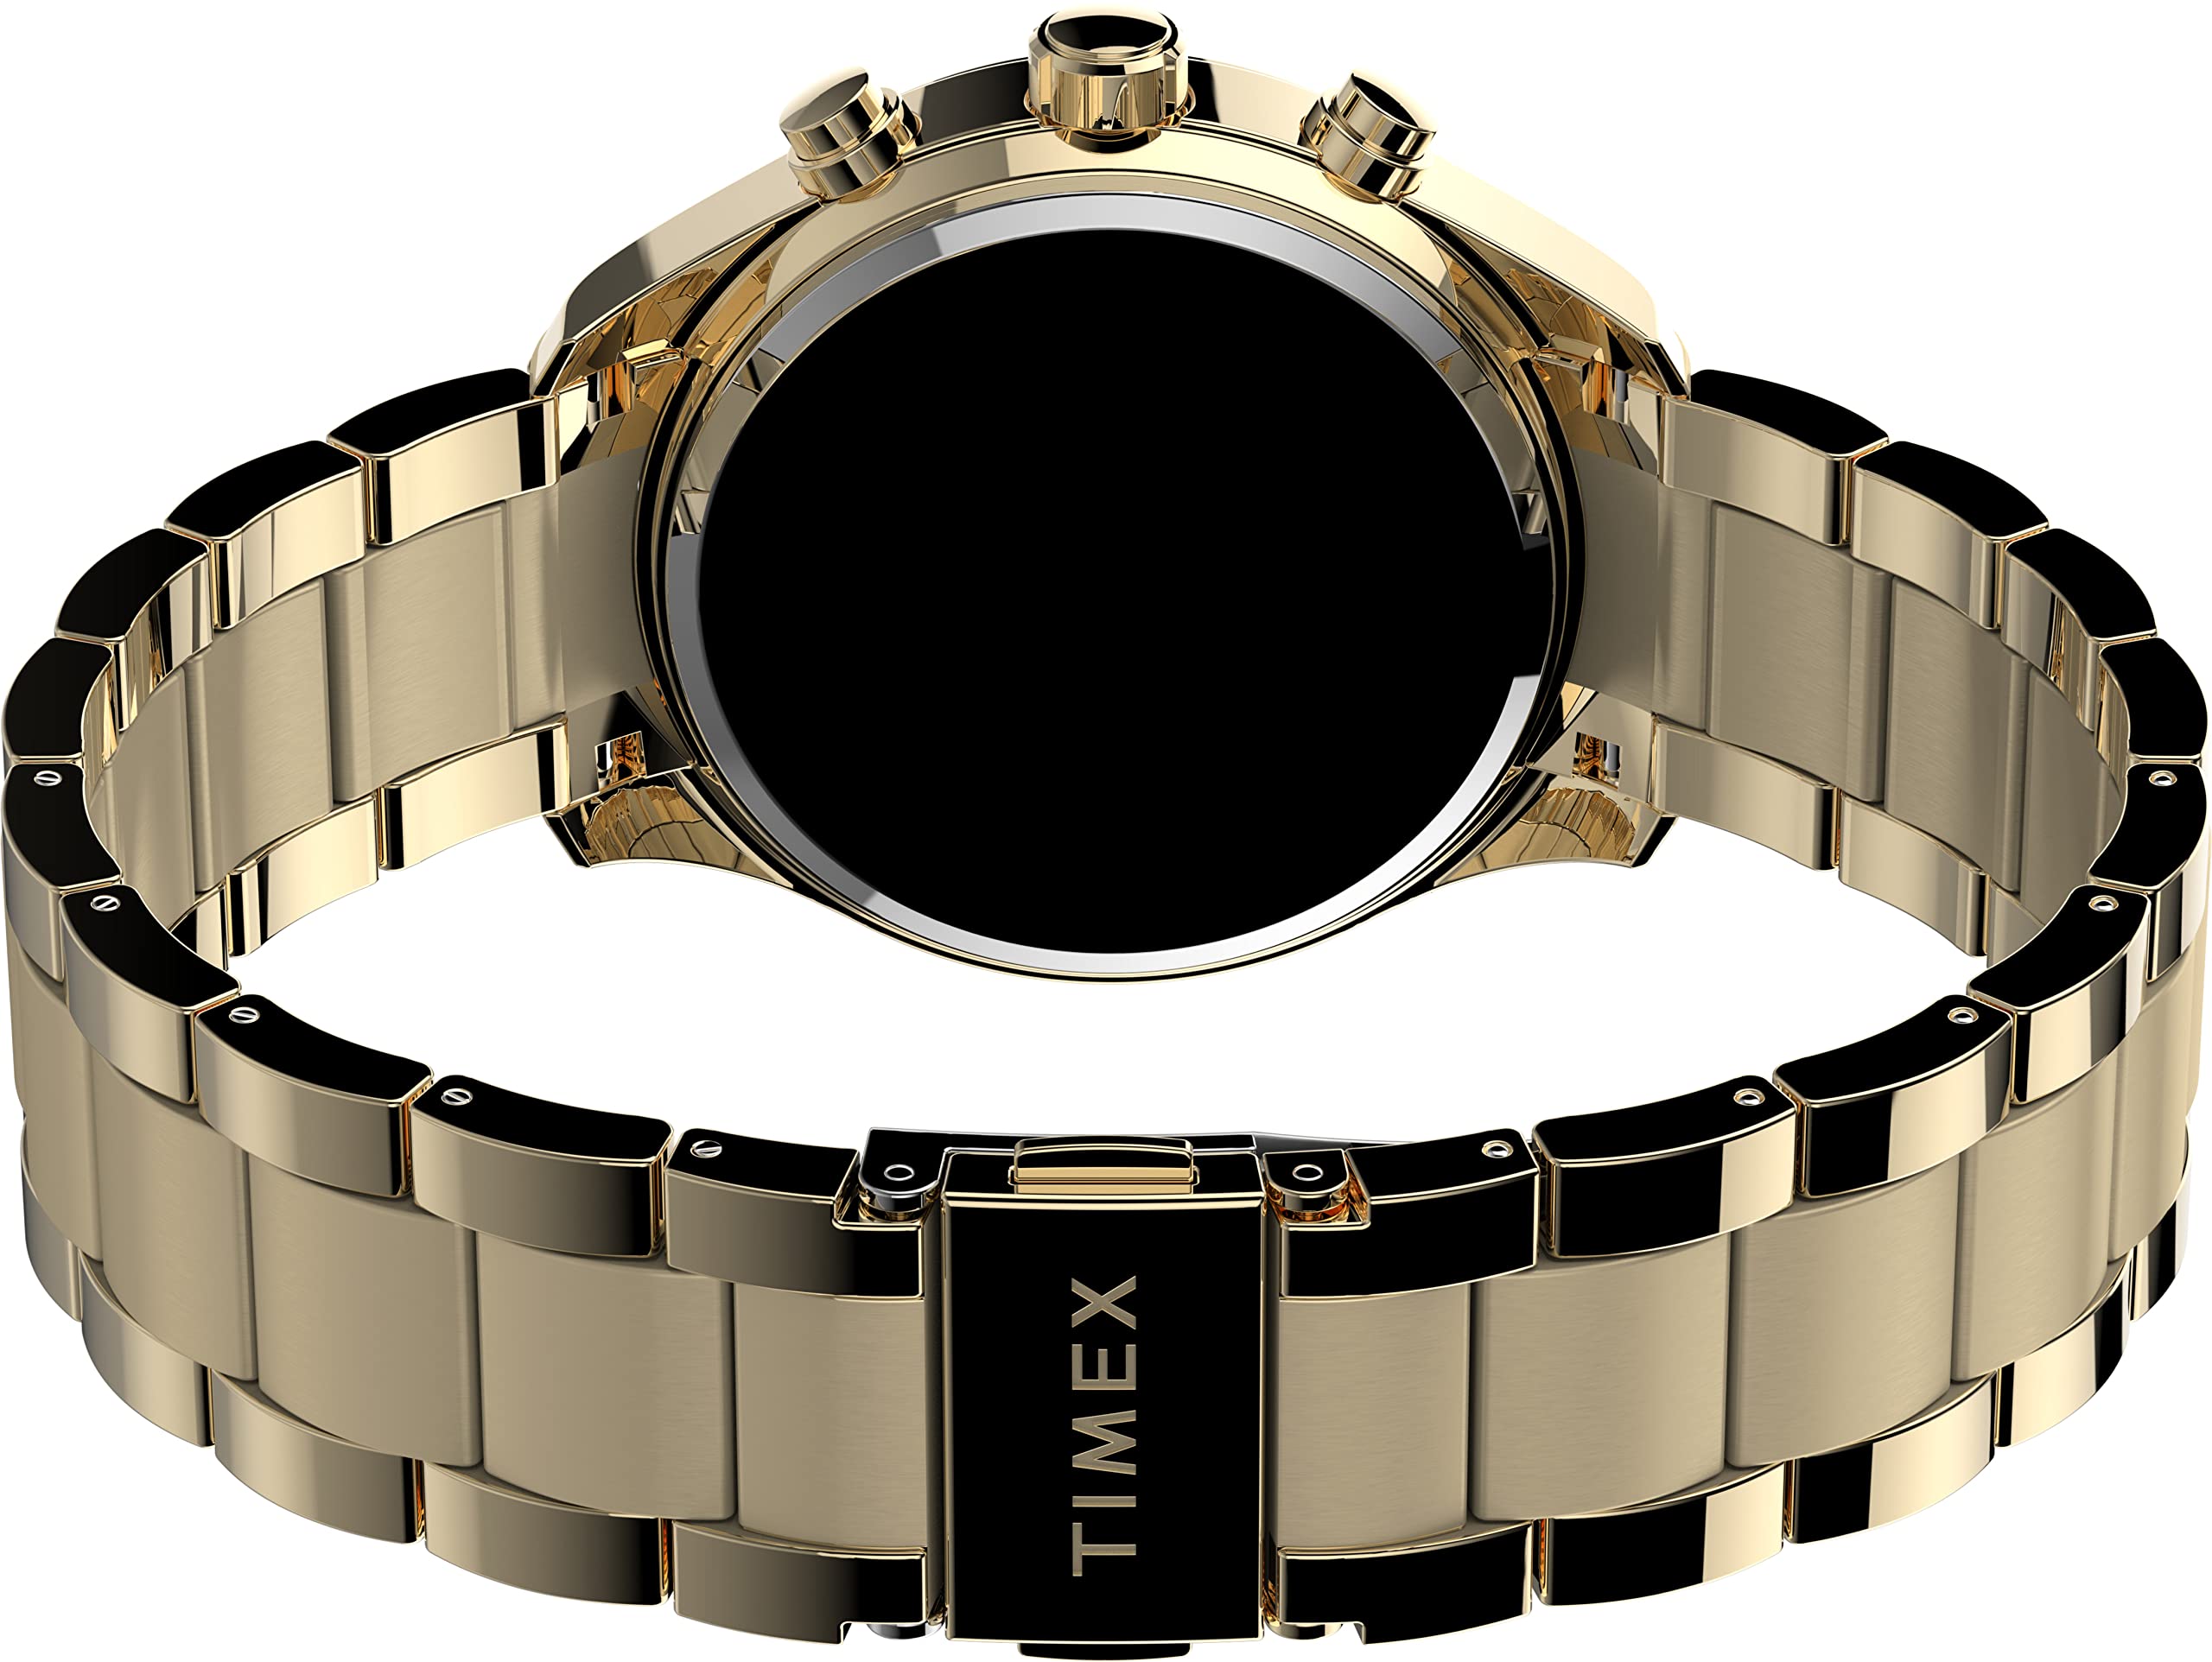 Timex Women's Standard Chronograph 38mm Watch – Two-Tone Case Two-Tone Dial Two-Tone Bracelet